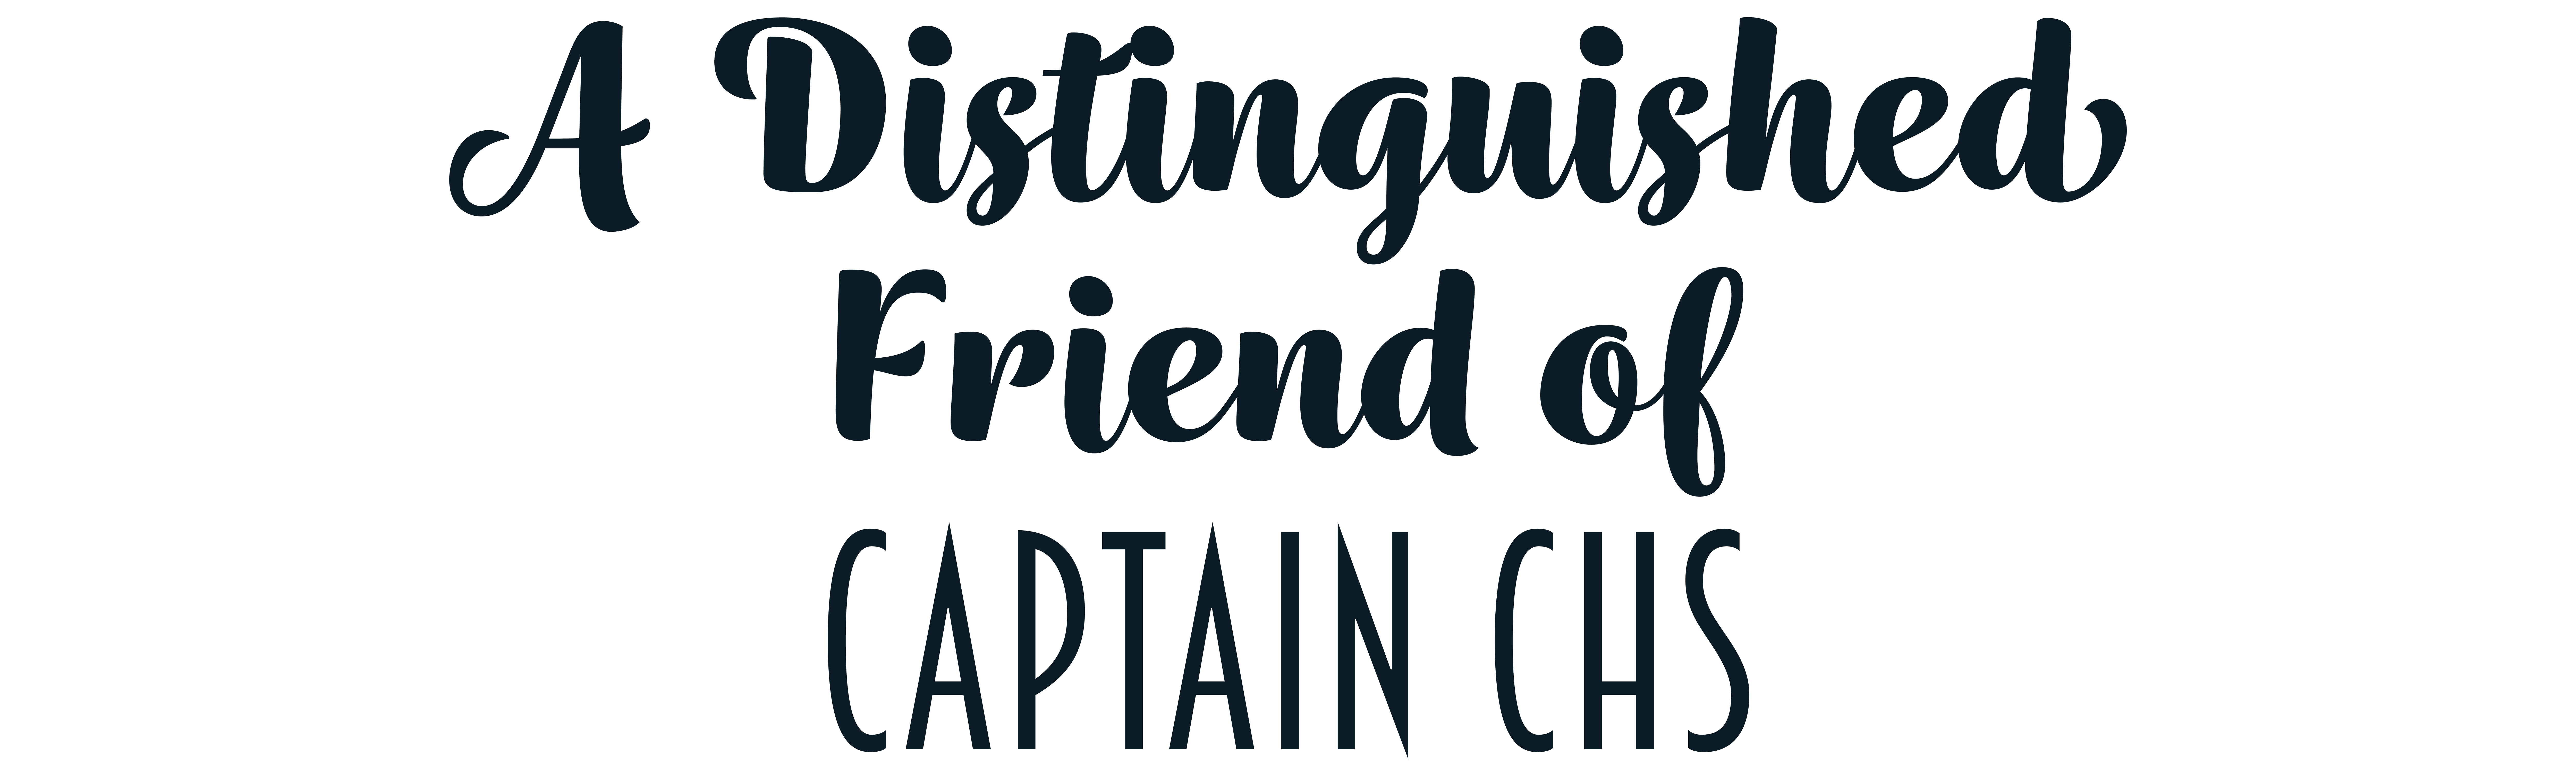 A Distinguished Friend of CAPTAIN CHS